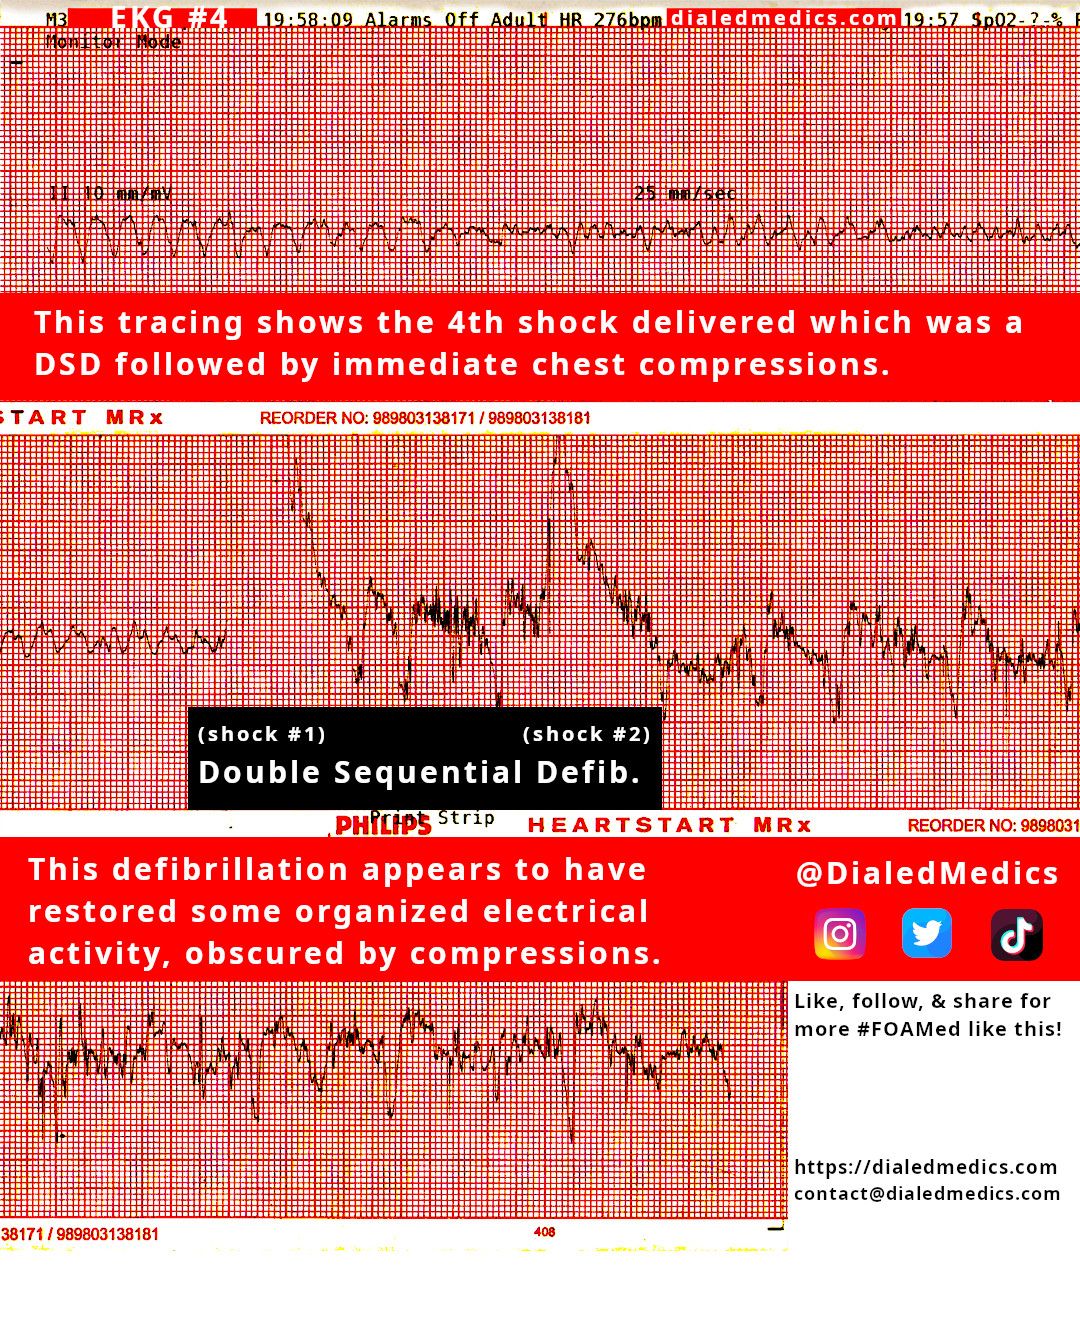 EKG #4 Showing a double sequential defibrillation (shock #4).